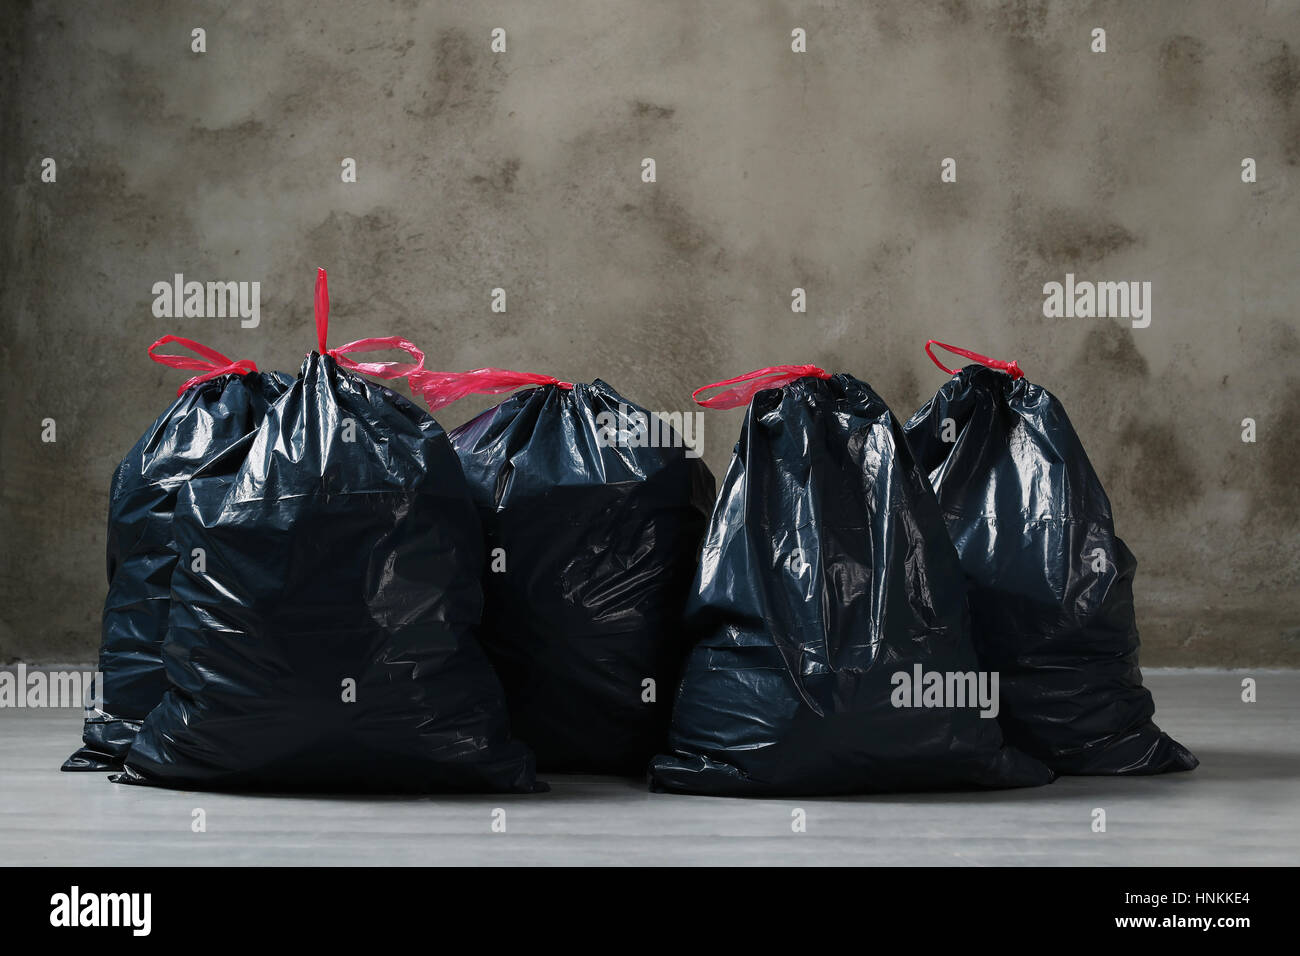 https://c8.alamy.com/comp/HNKKE4/pollution-trash-bags-on-the-floor-HNKKE4.jpg